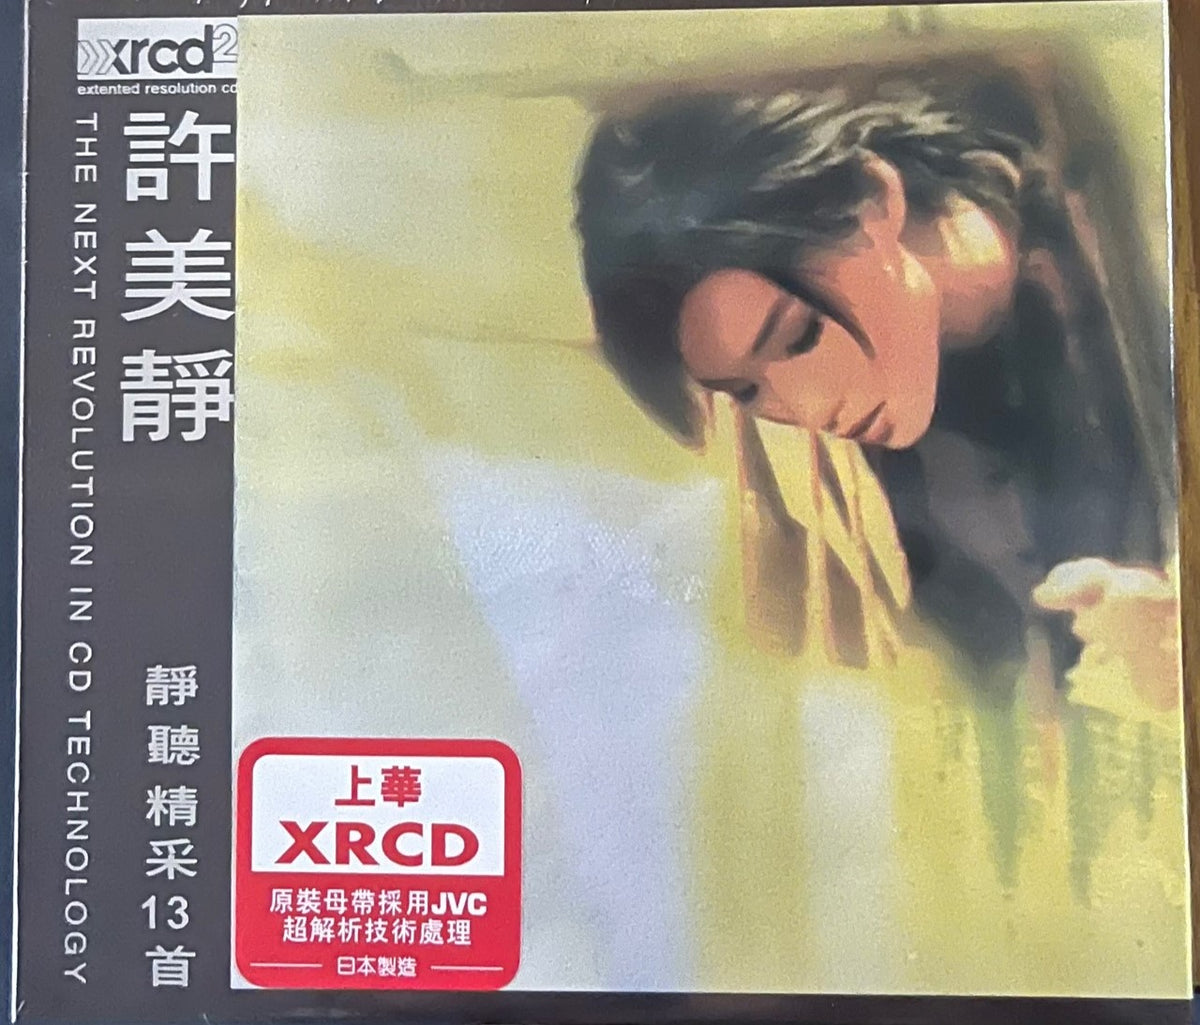 MAVIS HEE - 許美靜靜聽精采十三首(XRCD) MADE IN JAPAN 